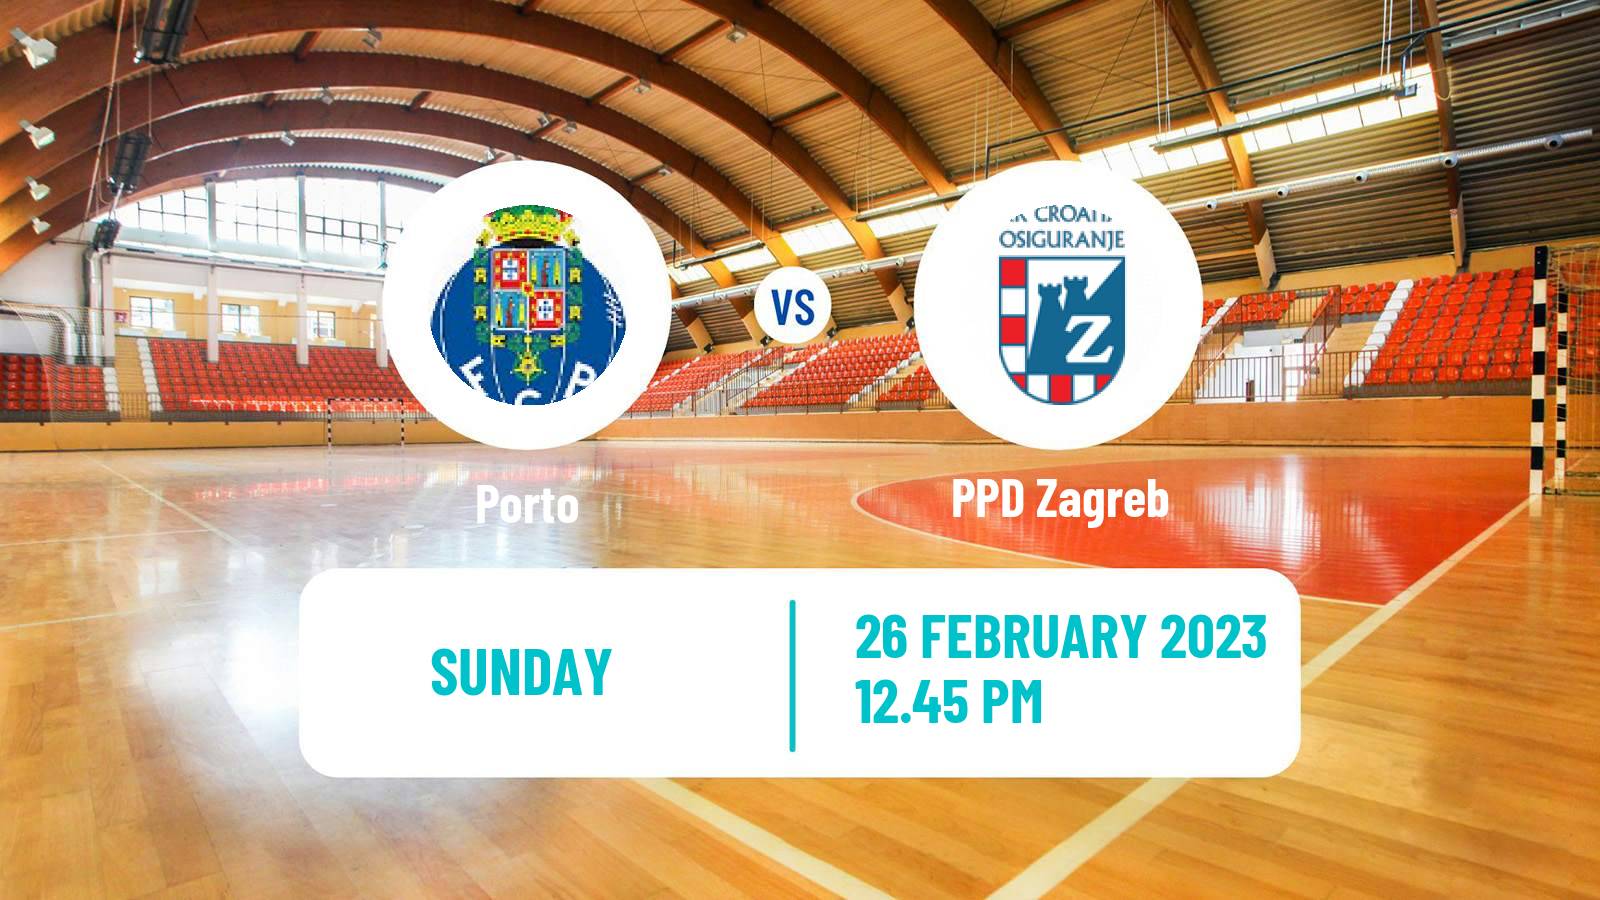 Handball EHF Champions League Porto - PPD Zagreb